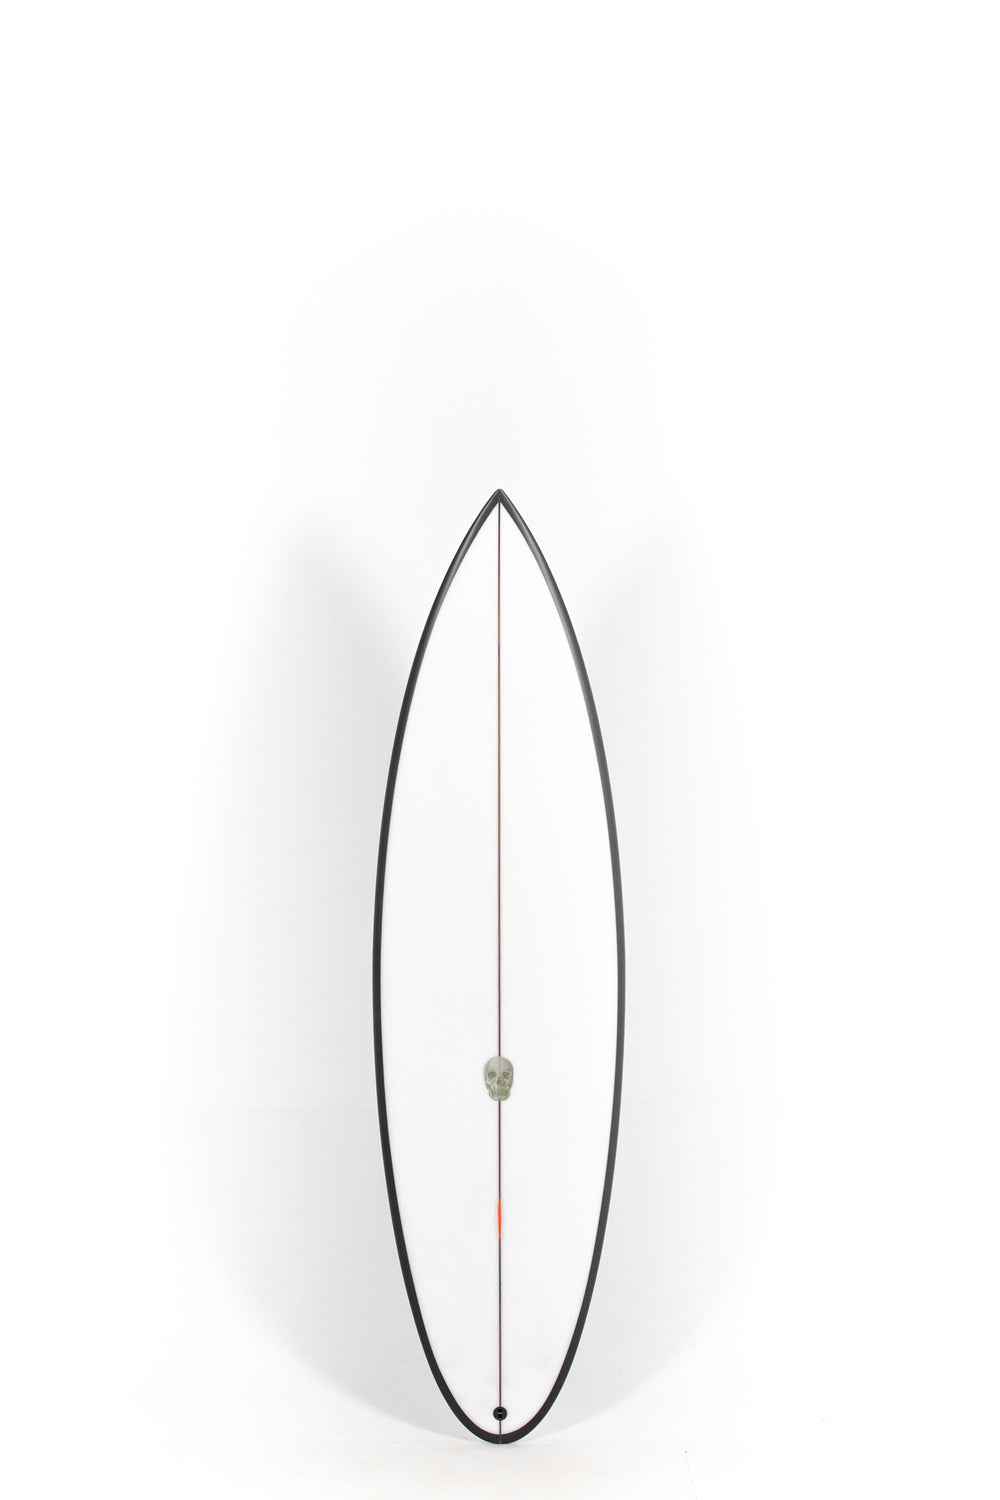 Pukas Surf Shop - Christenson Surfboards - OP4 - 6'0